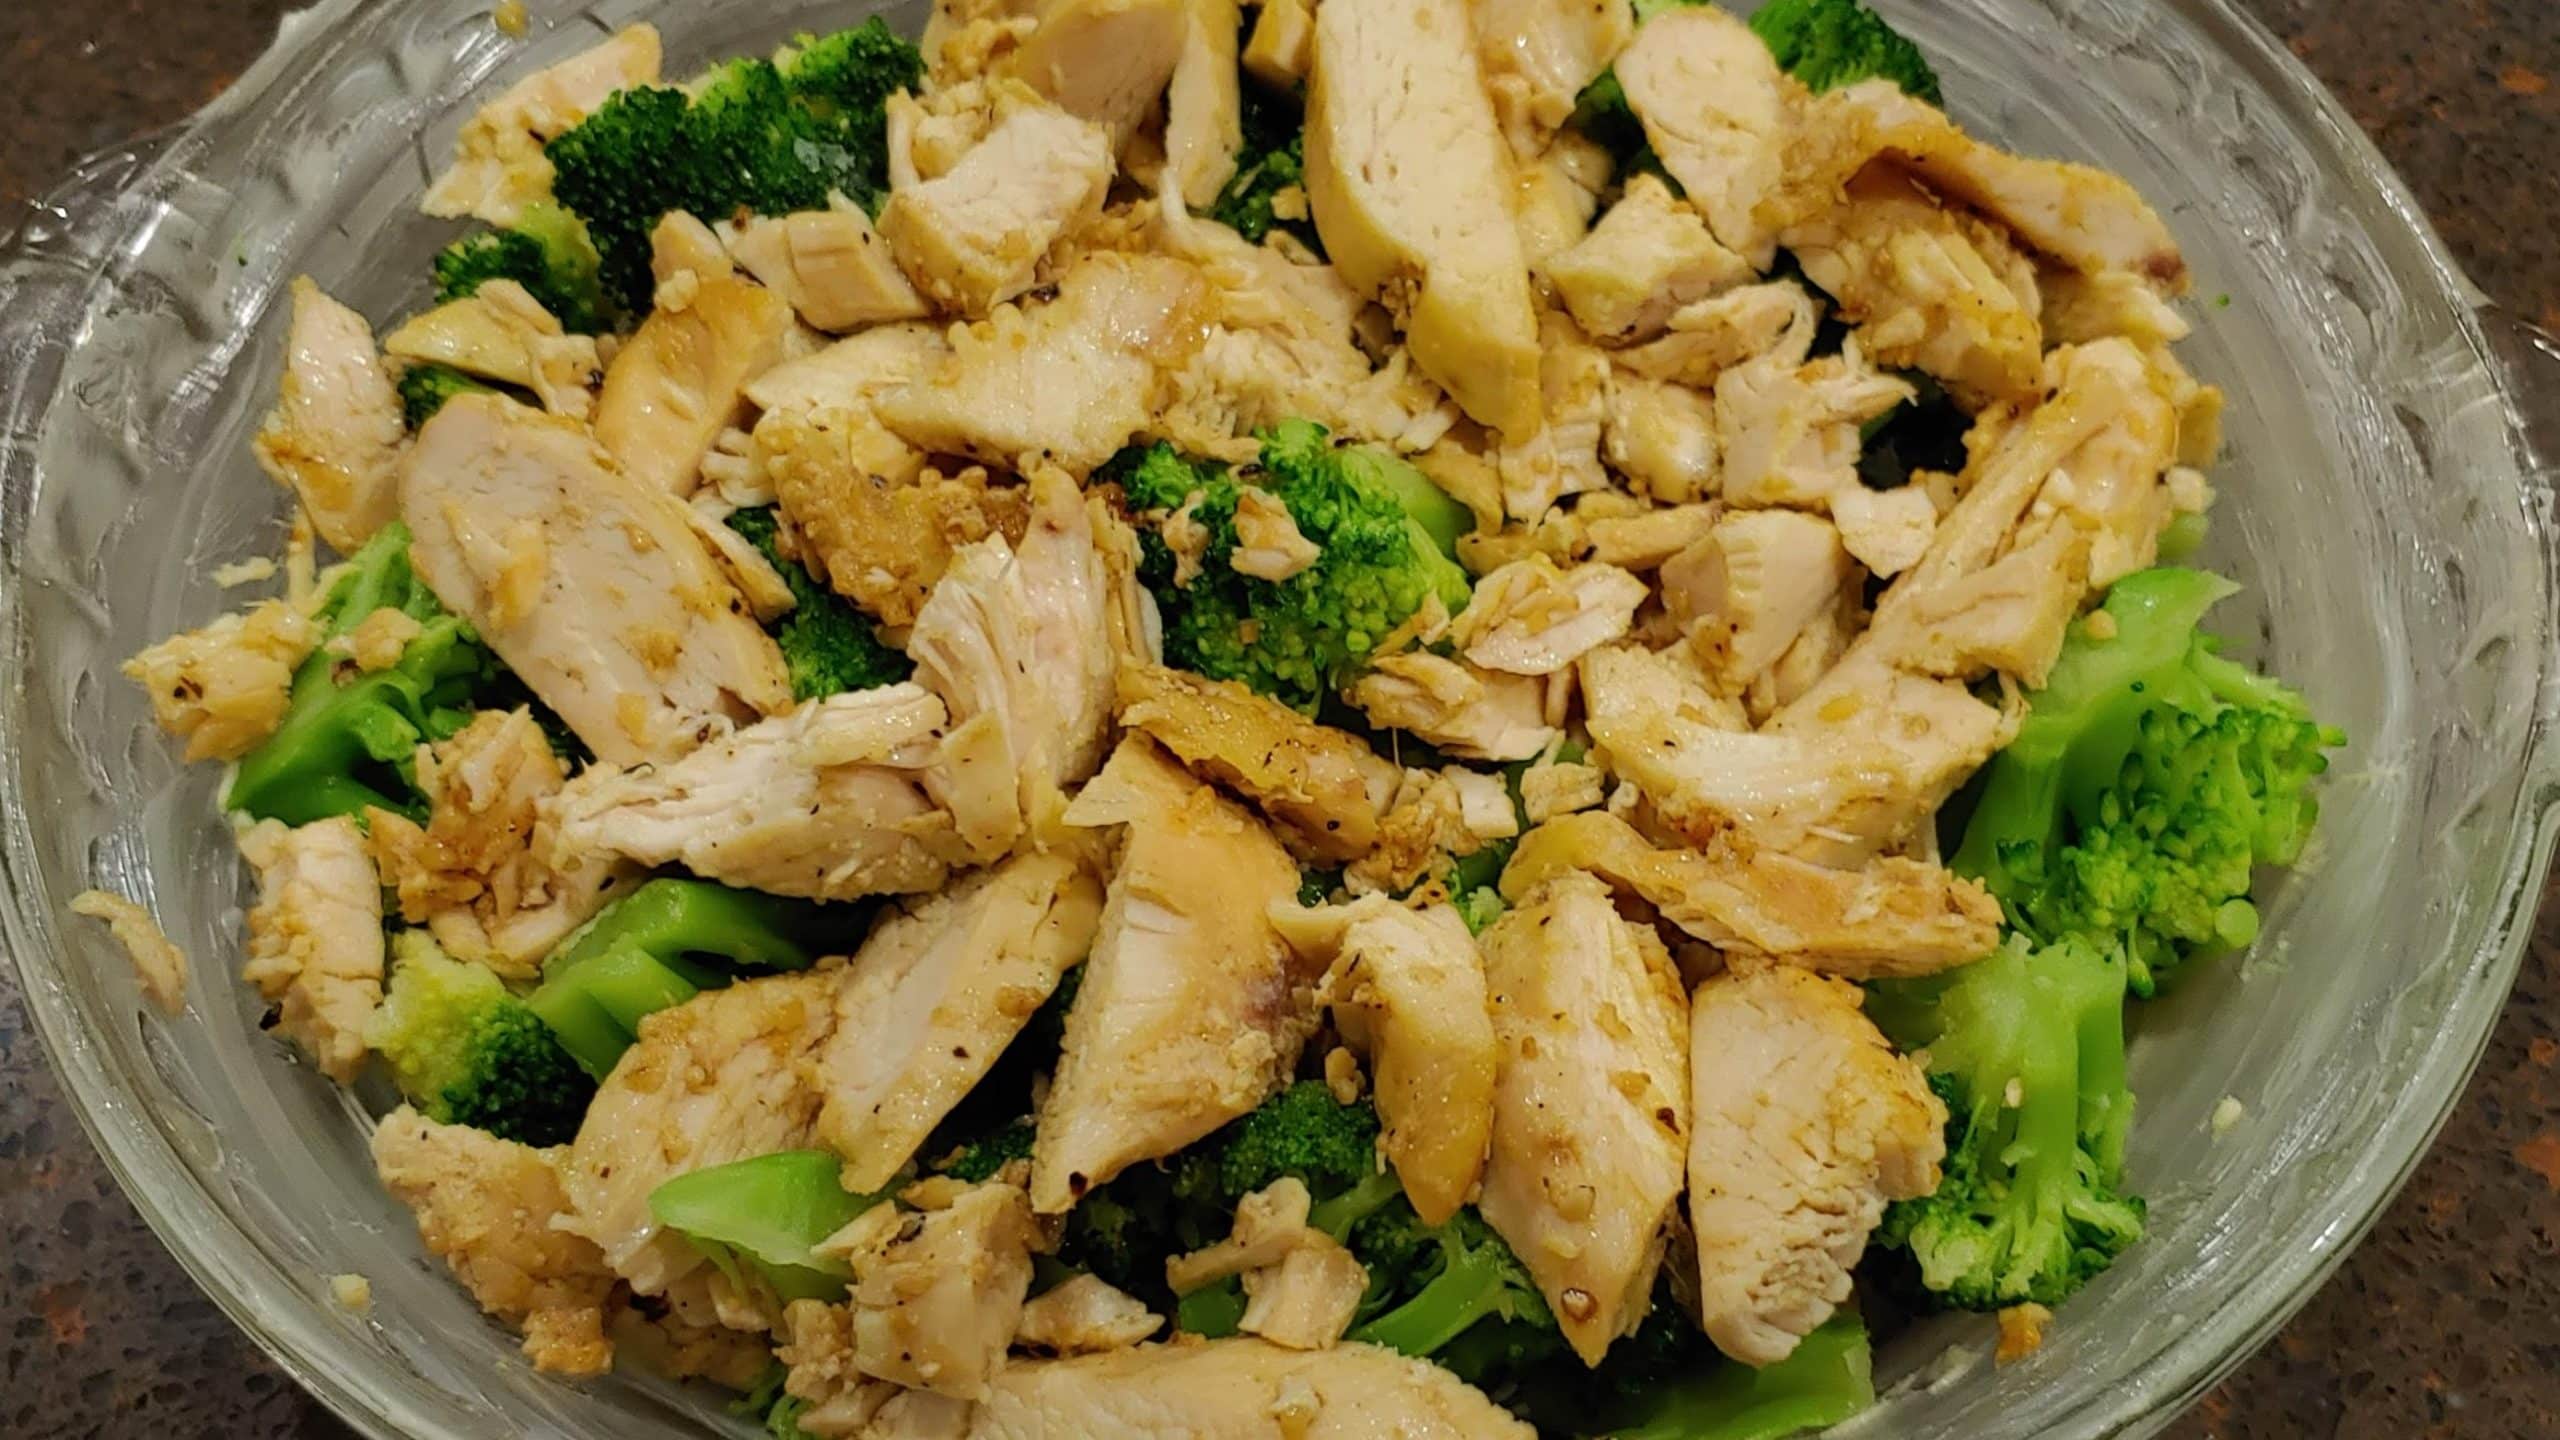 Prepared Chicken and Broccoli for Quiche - Dining in with Danielle